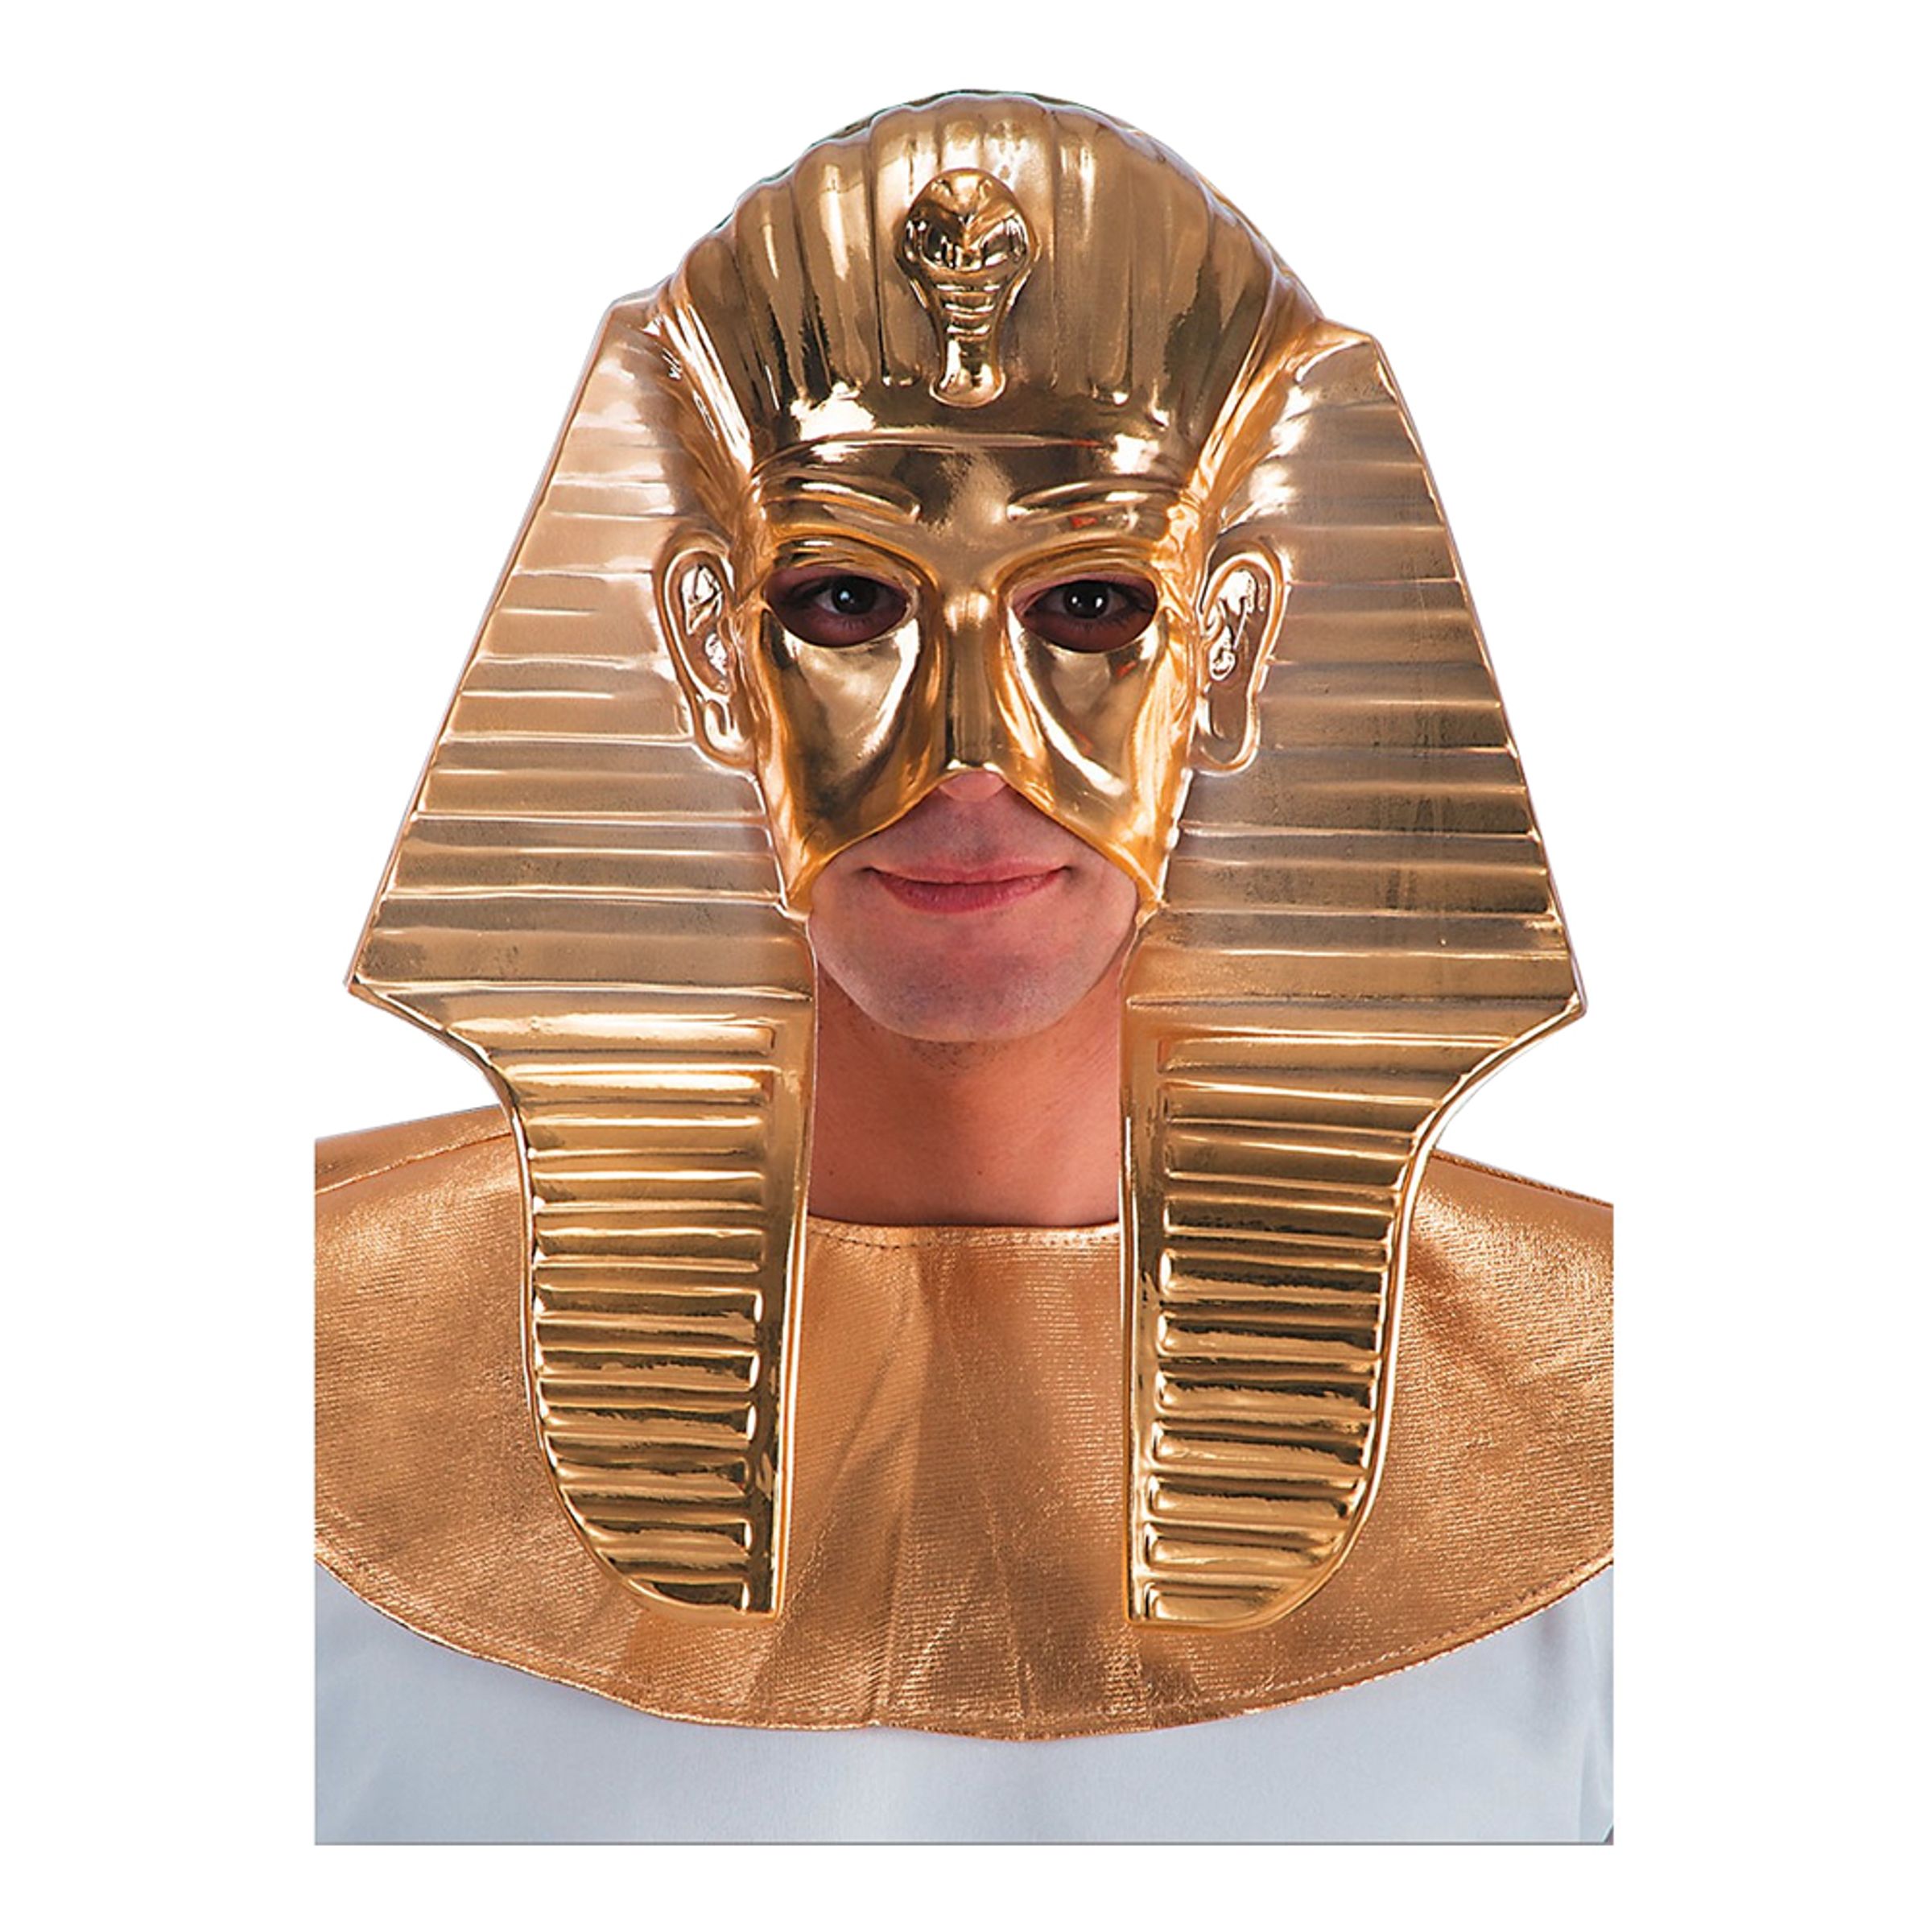 Farao Mask Guld - One size